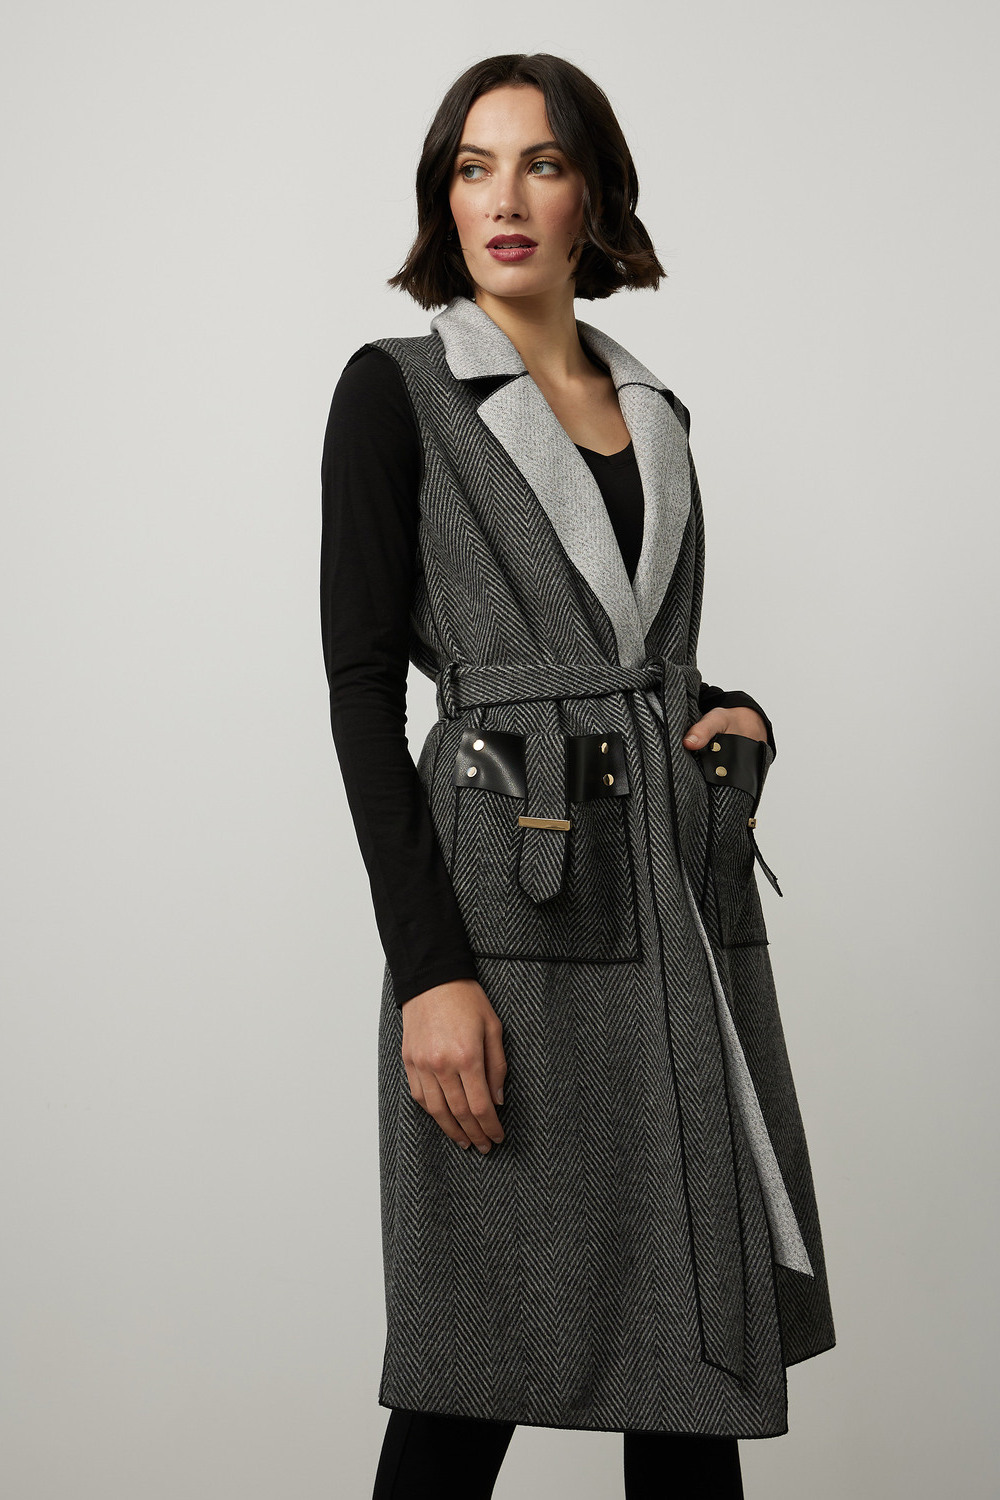 Joseph Ribkoff Knit Sleeveless Jacket Style 214195. Black/grey